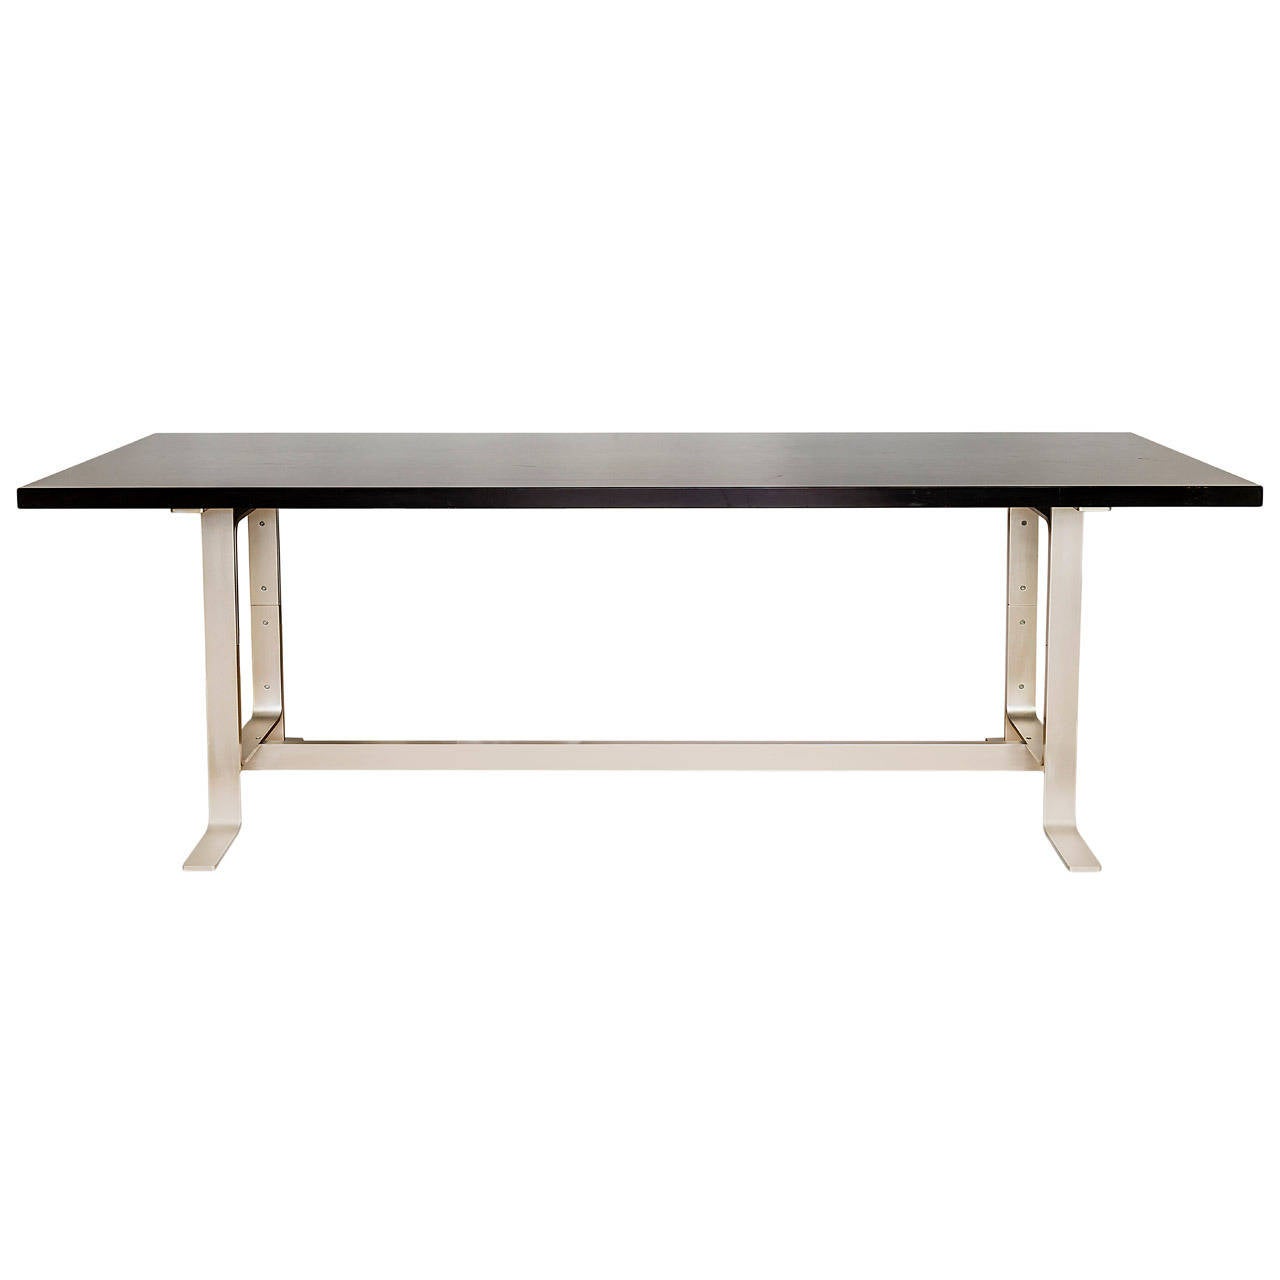 Console Table
Black Lacquered Mahogany
Aluminium  Steel Base
220 X 70 X 75
2500 euros